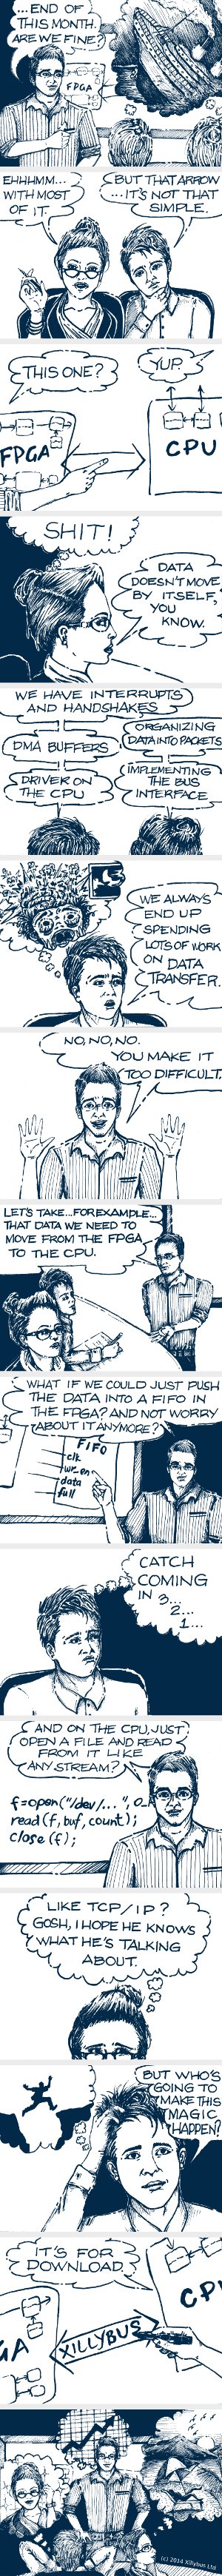 FPGA/CPU data transfer comic strip